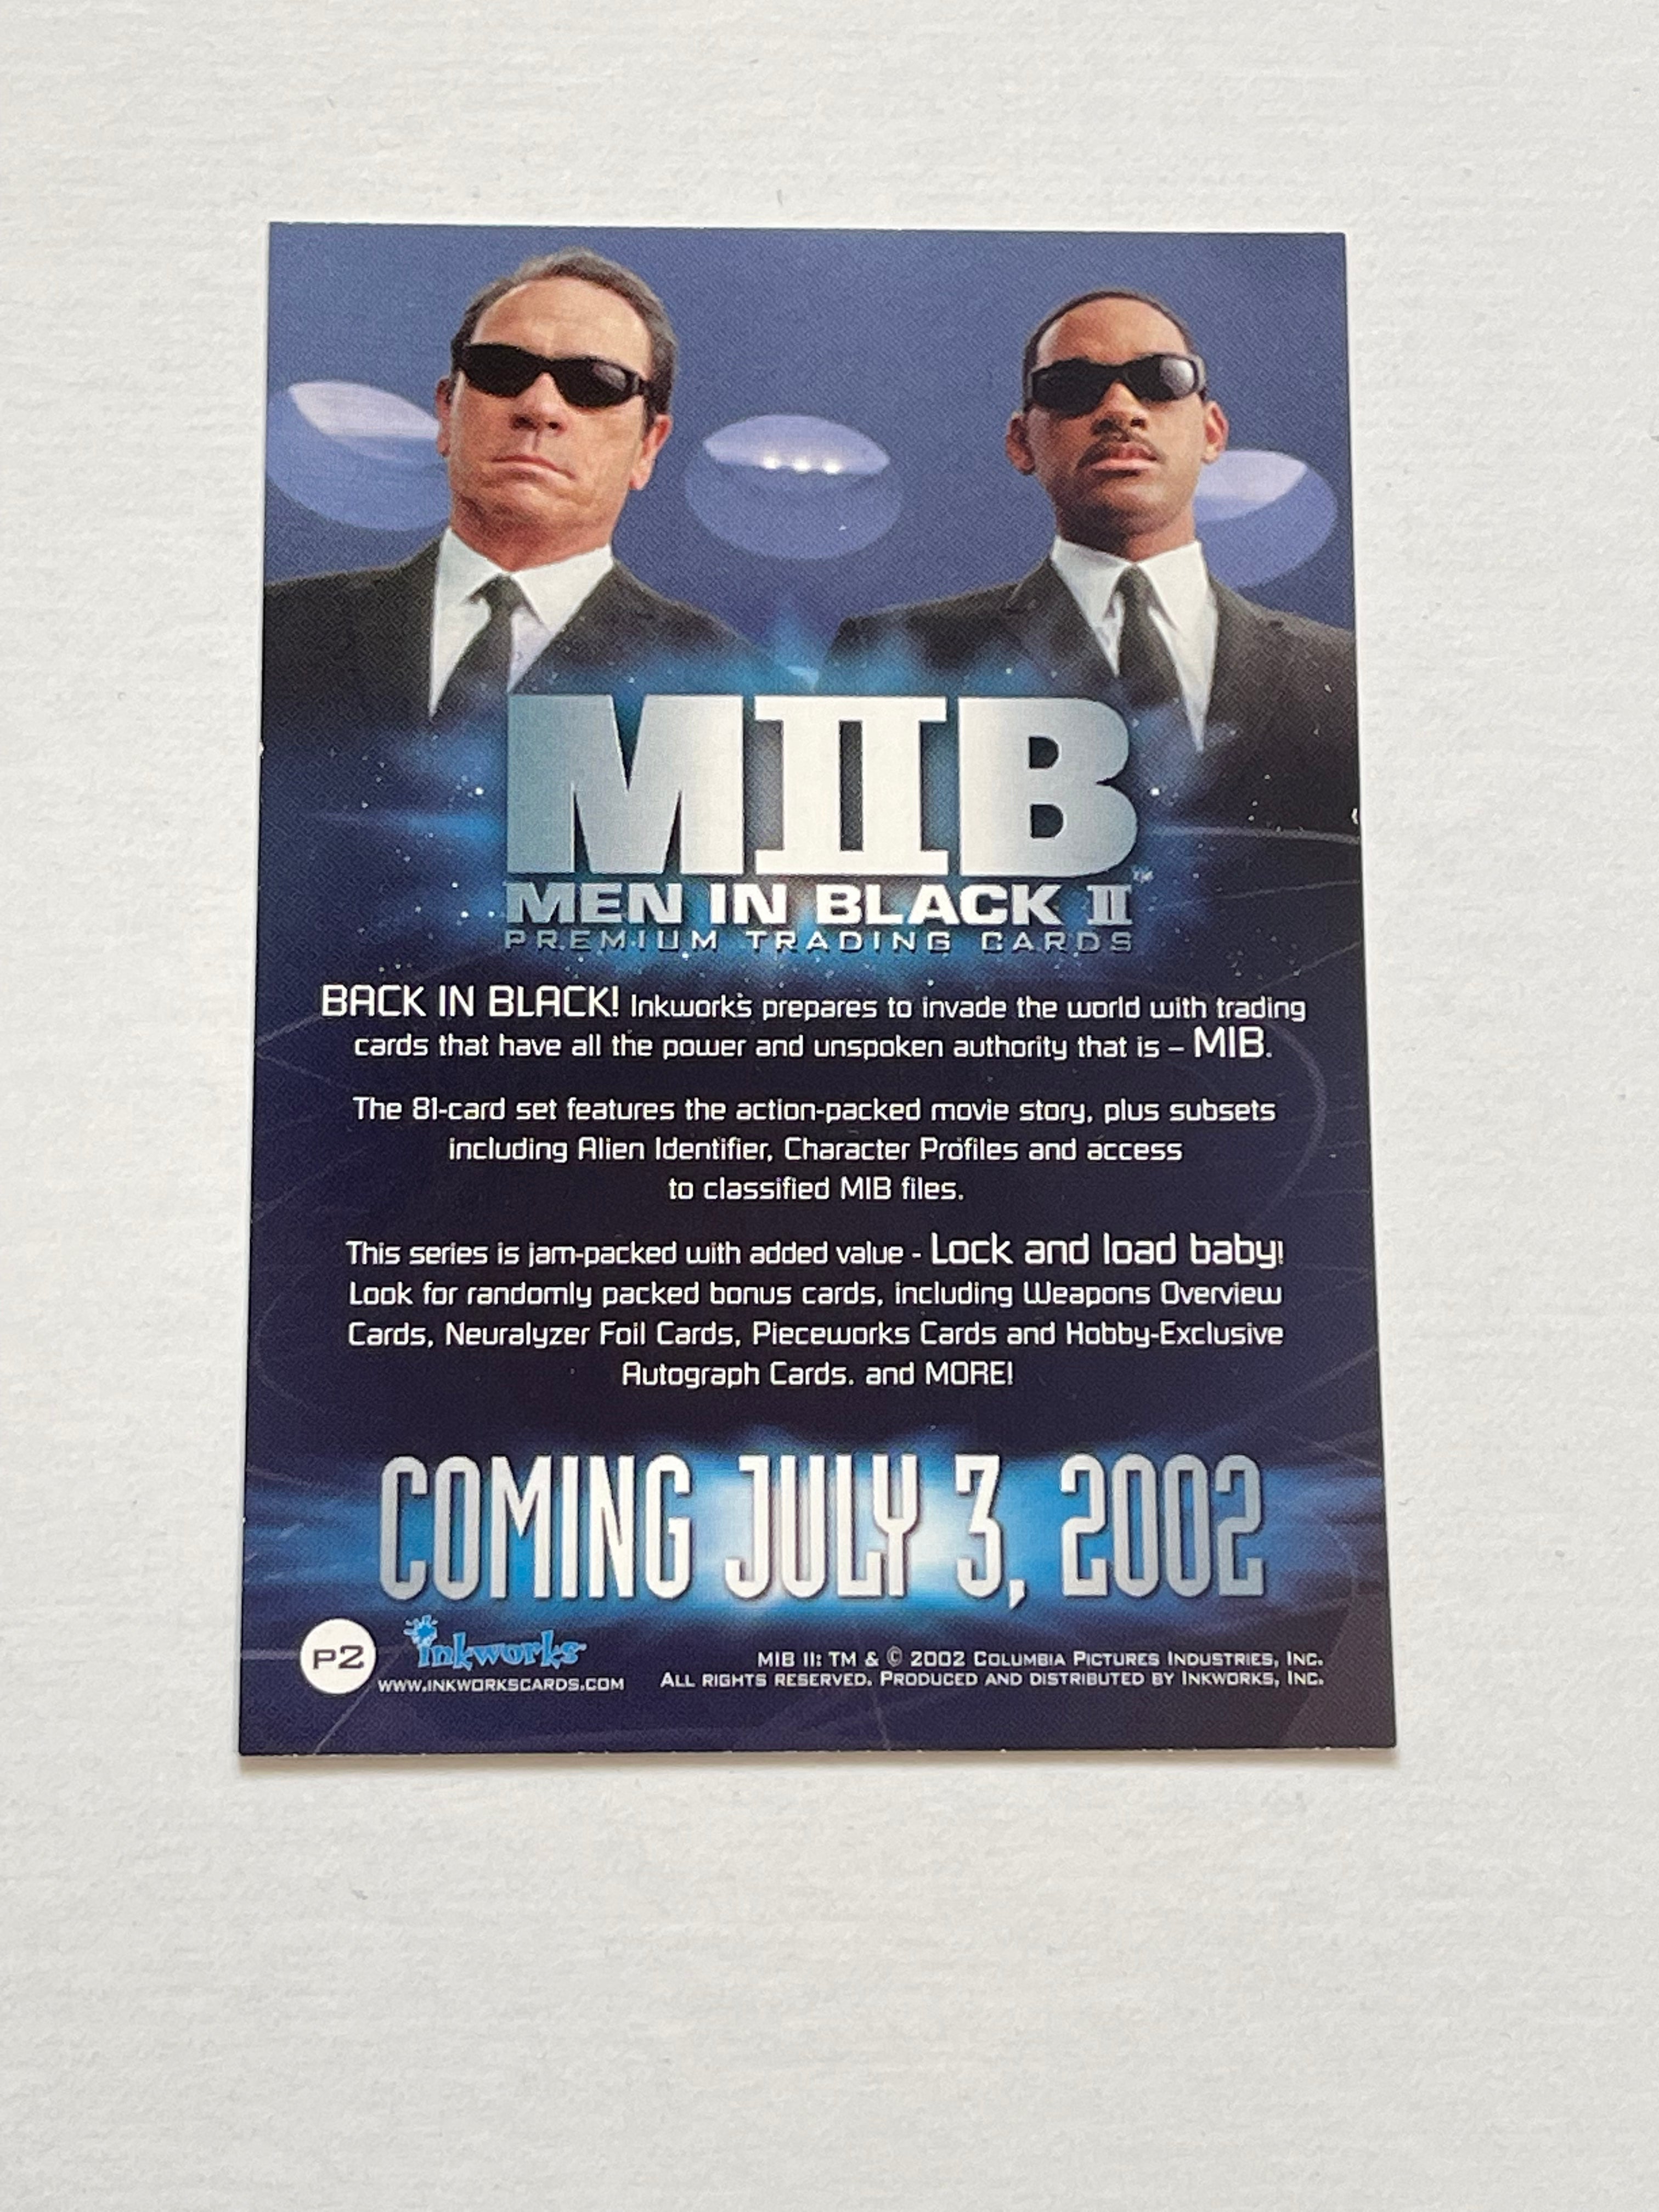 Will Smith Men in Black movie promo card 2002